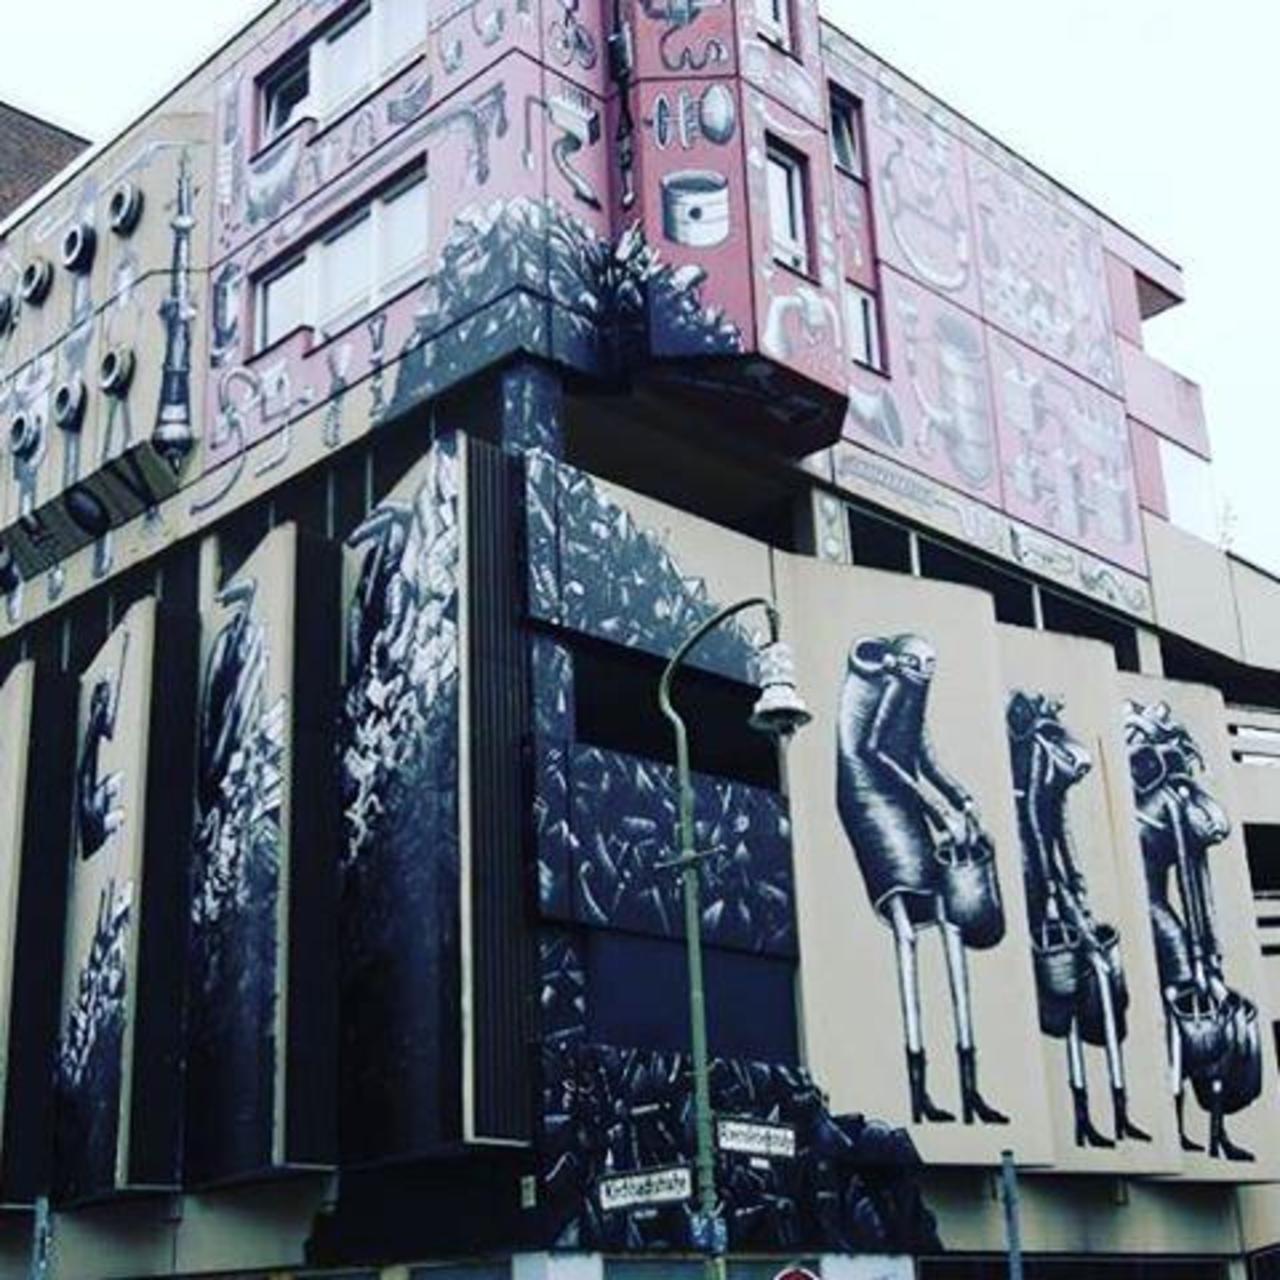 Phlegm #stencil #striker #muralart #murales #graffiti #streetart... #Art - - https://wp.me/p6qjkV-4mf http://t.co/ahGJ4I1xn0